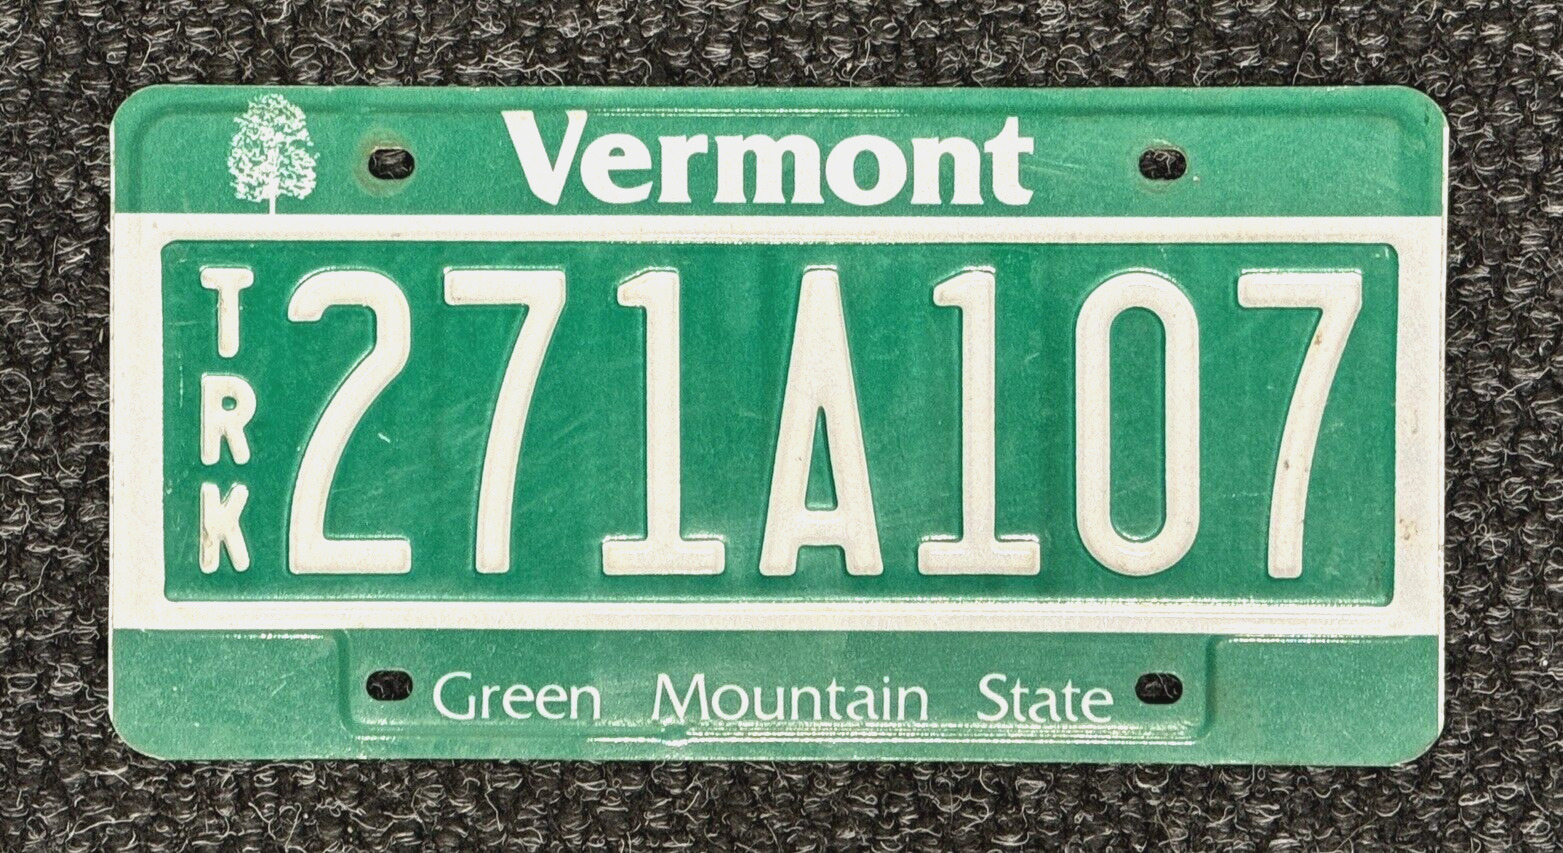 1985 VERMONT truck license plate - OUTSTANDING ORIGINAL antique vintage auto tag